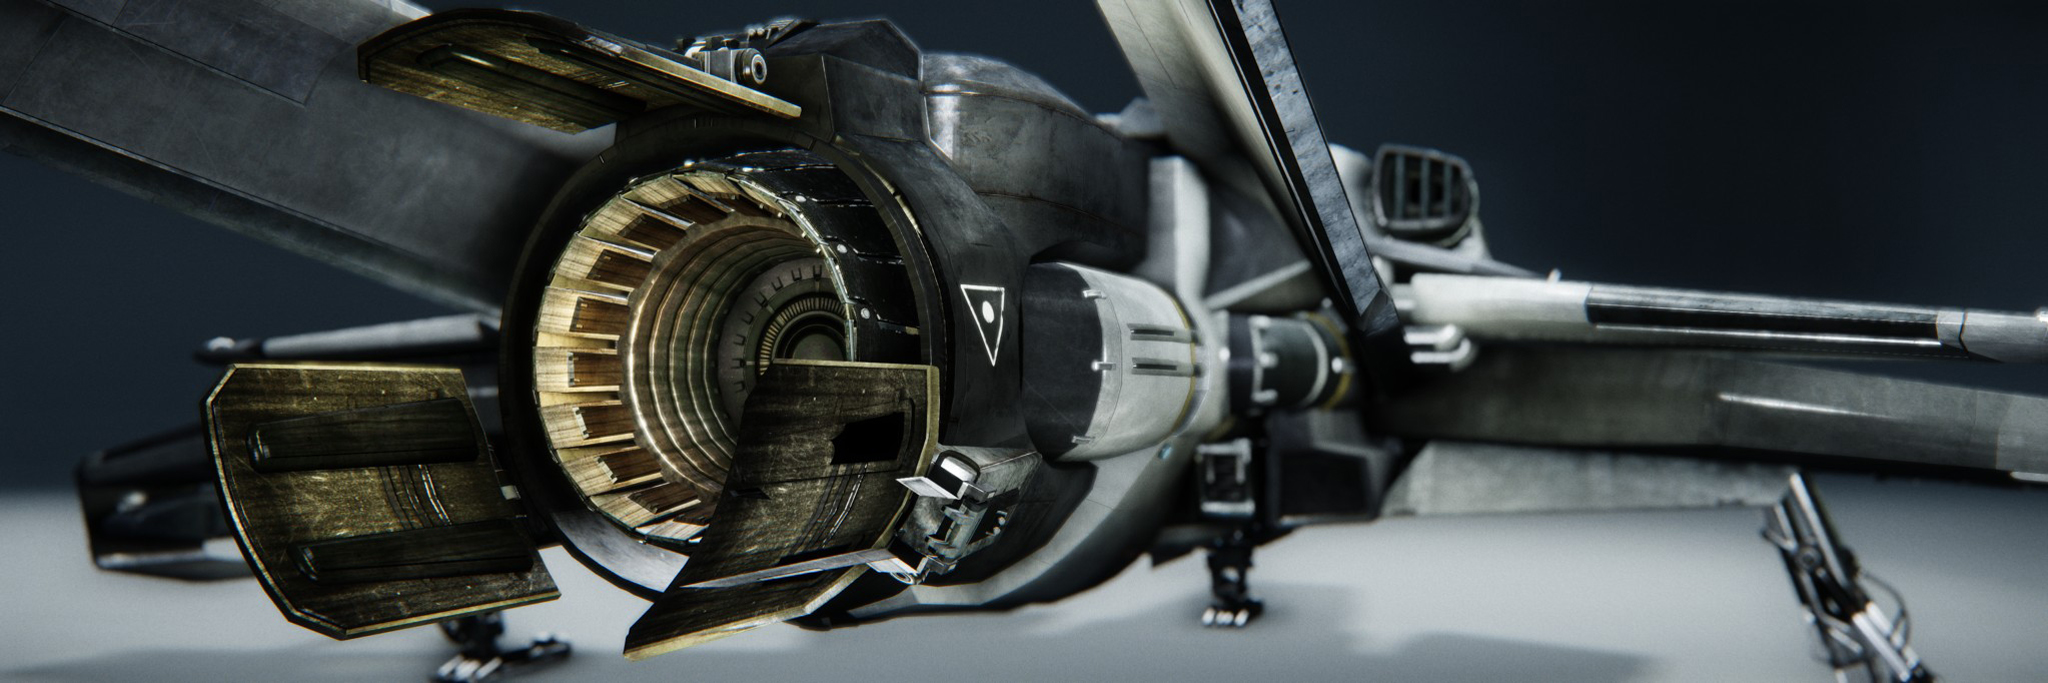 Datei:Hornet F7C engine visual.jpg